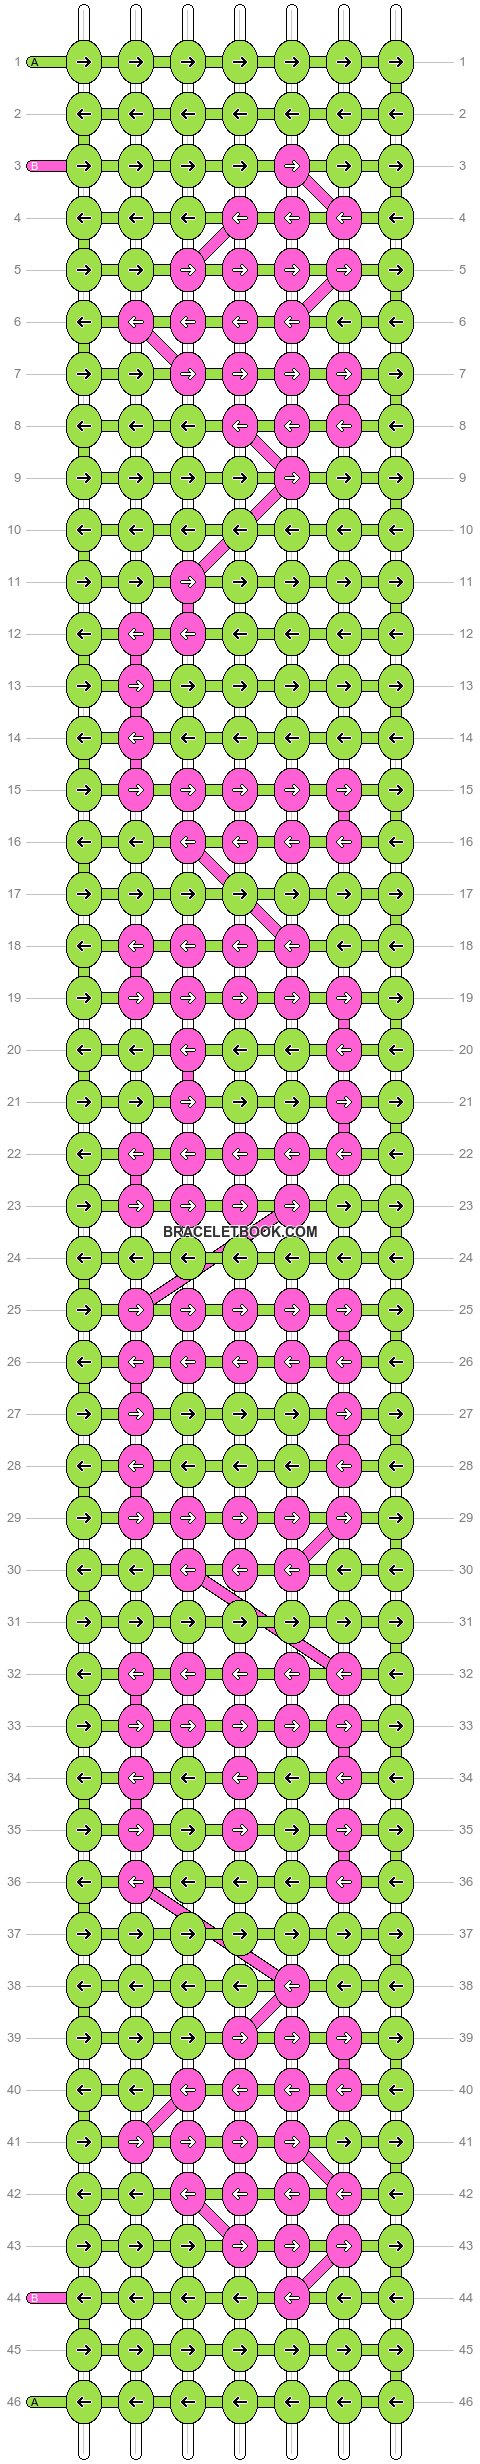 Alpha pattern #5183 pattern